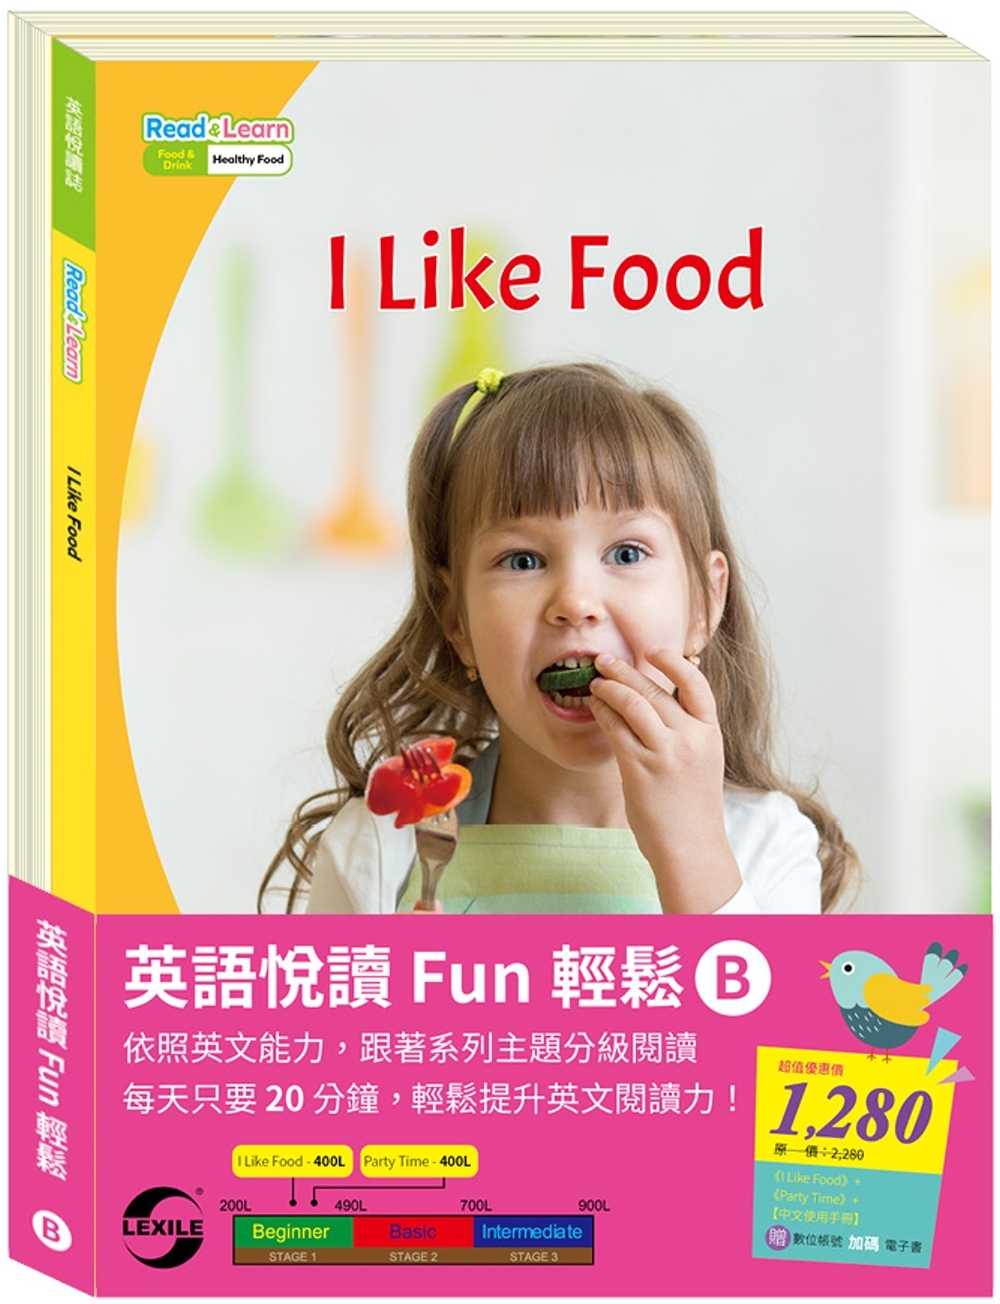 英語悅讀 Fun輕鬆 (B)套組：《I Like Food》+《Party Time》+ 中文使用手冊